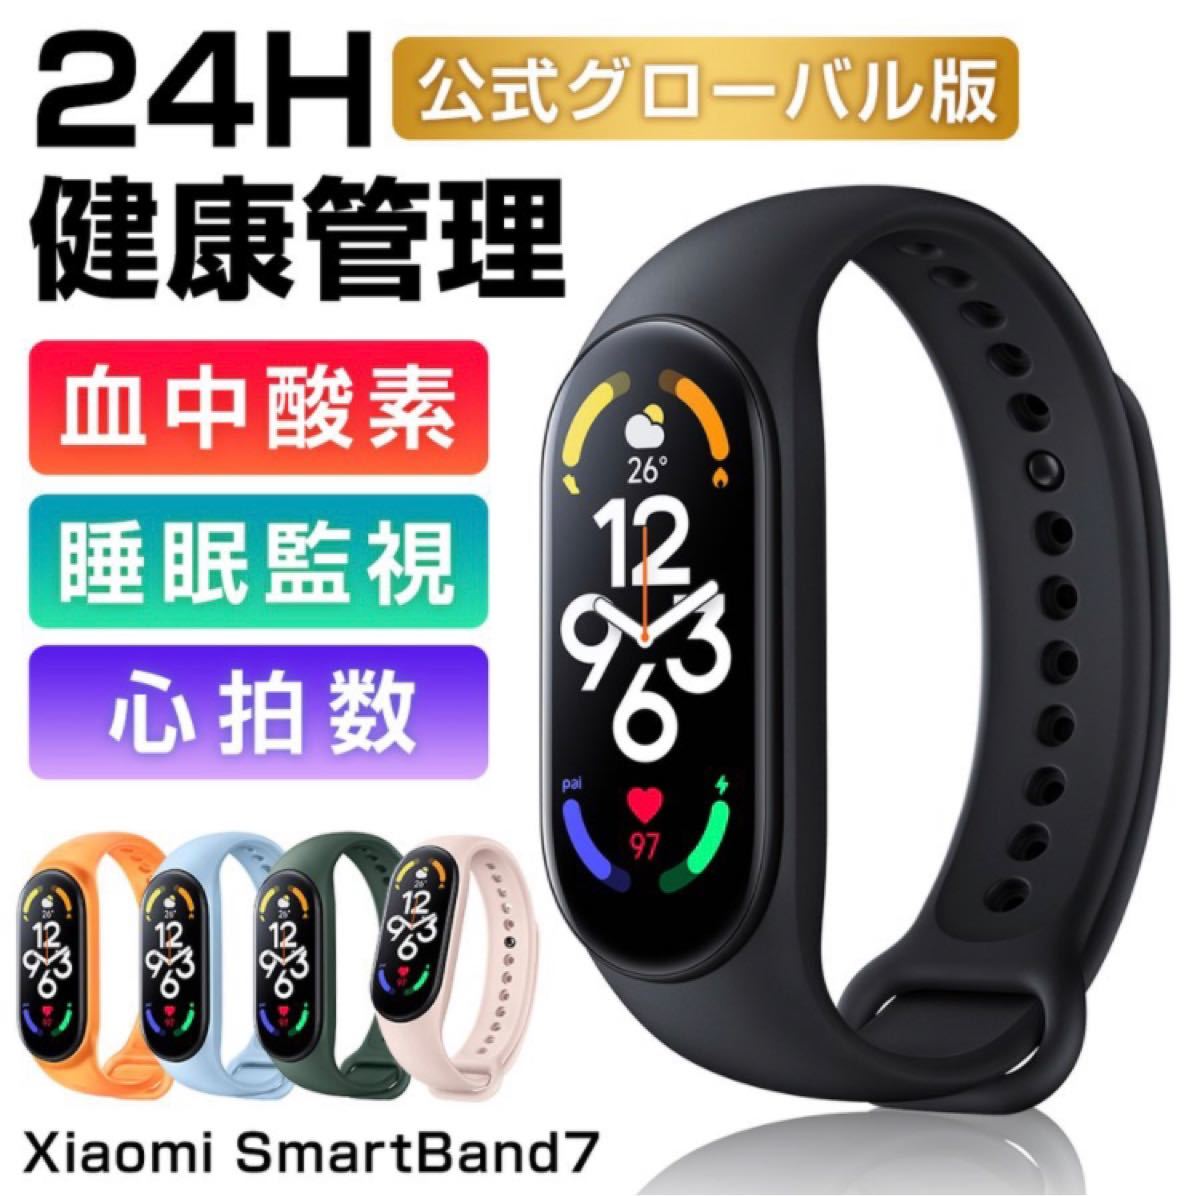 日本語版 Xiaomi mi smart band